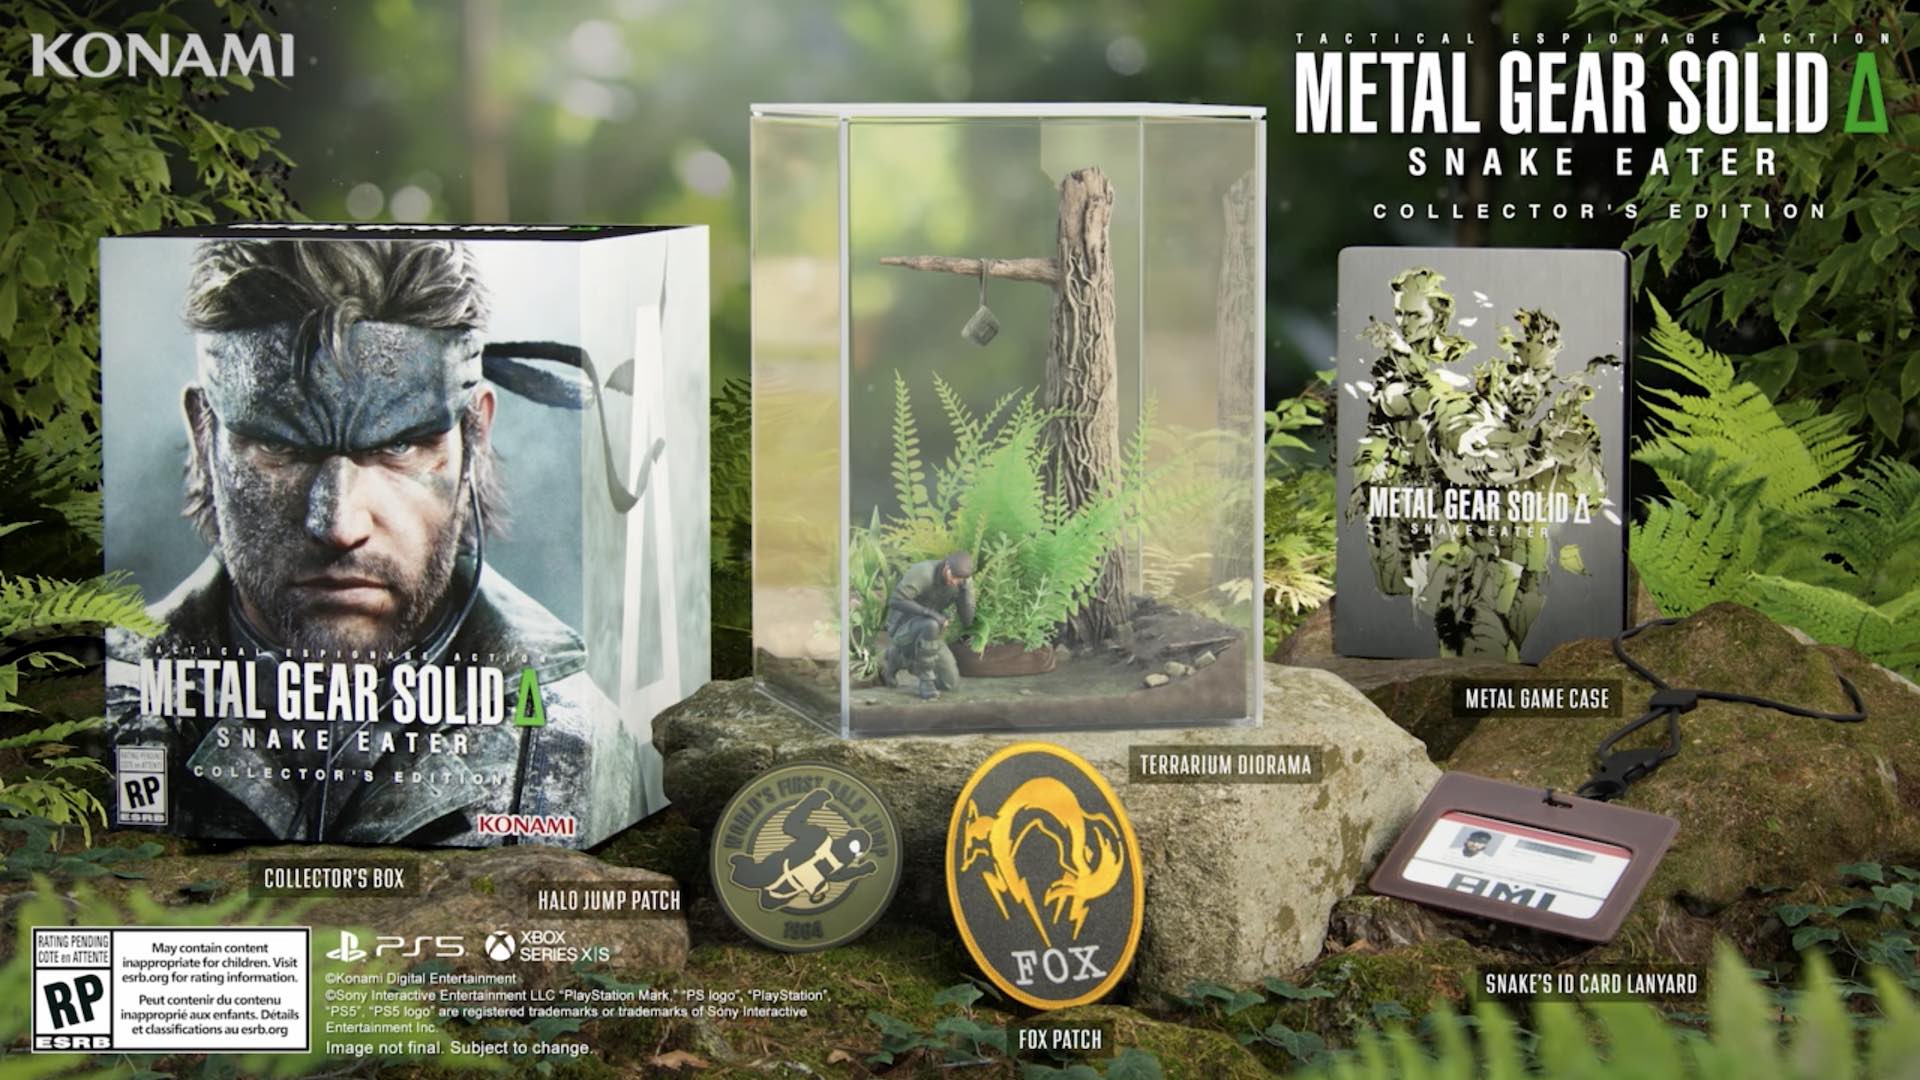 Contenu de l'édition Collector de Metal Gear Solid Delta: Snake Eater